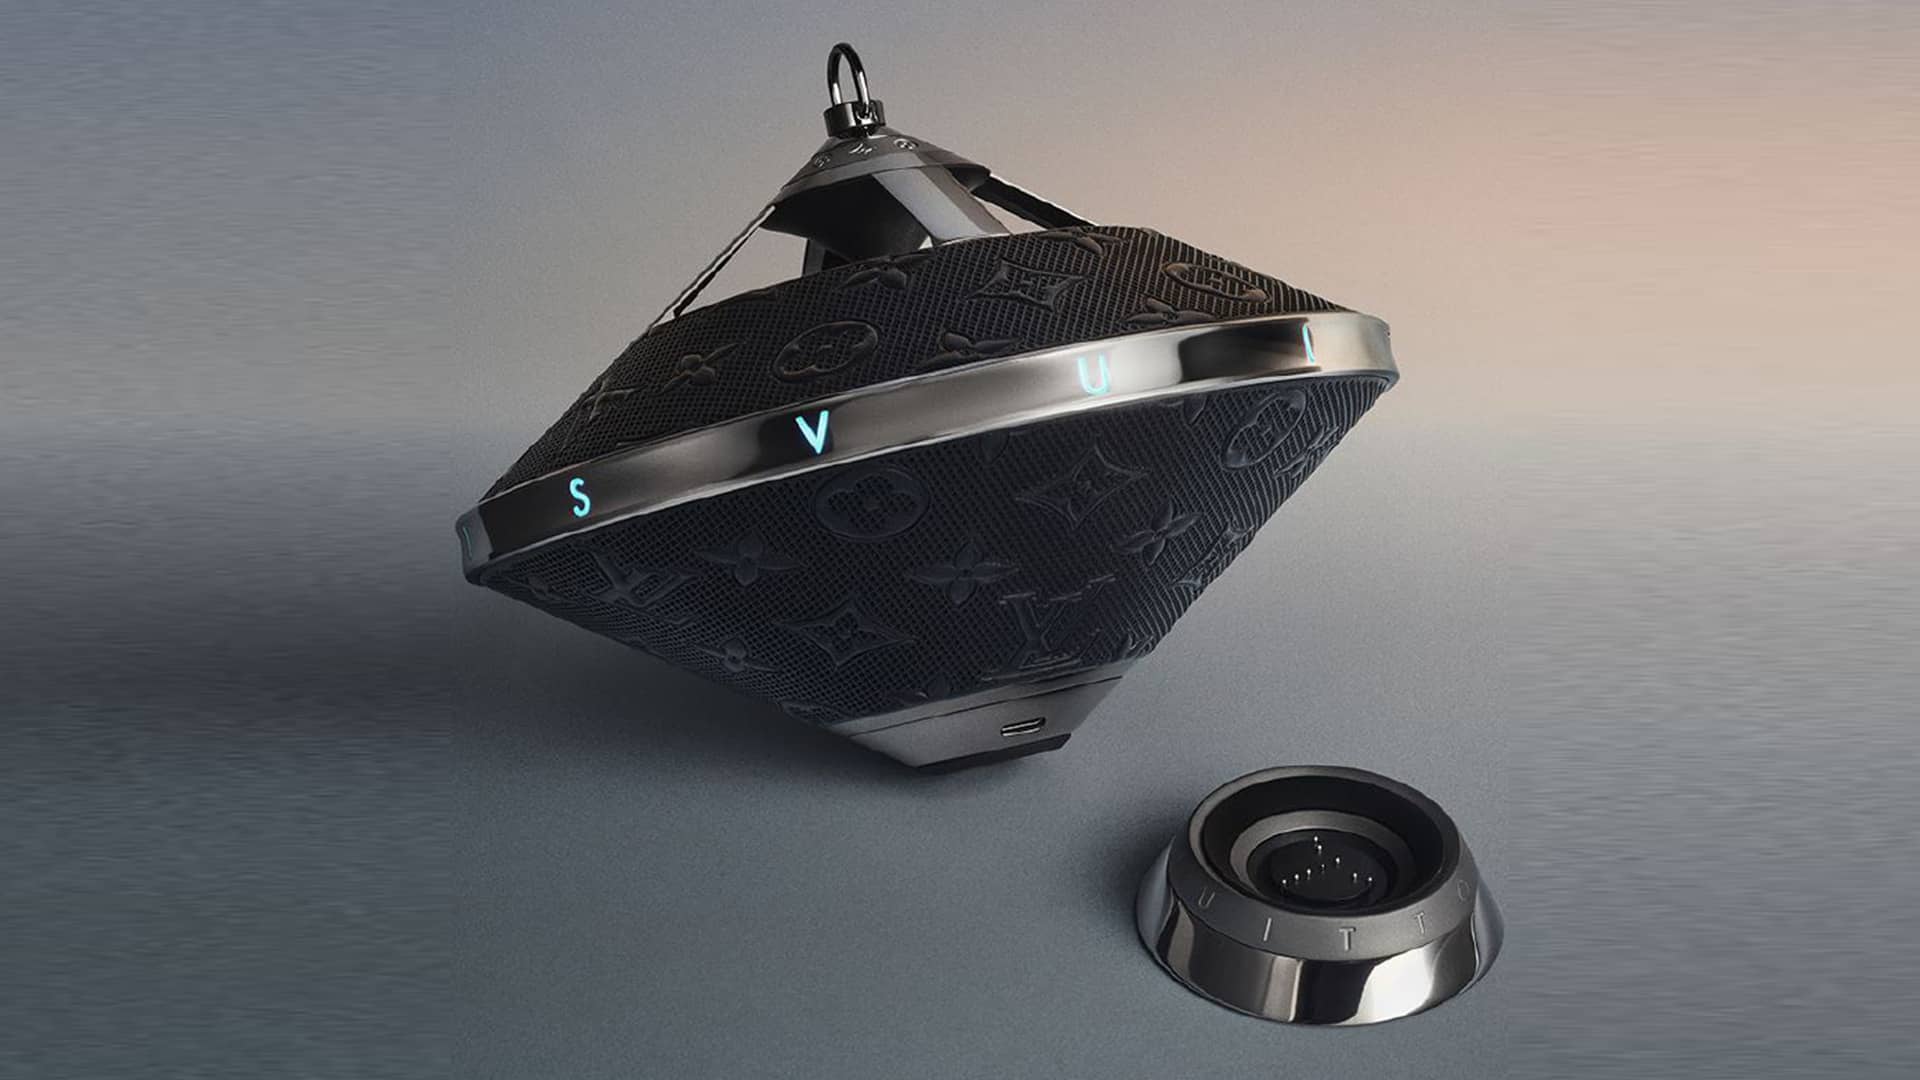 Introducing Louis Vuitton's Horizon Light Up speaker